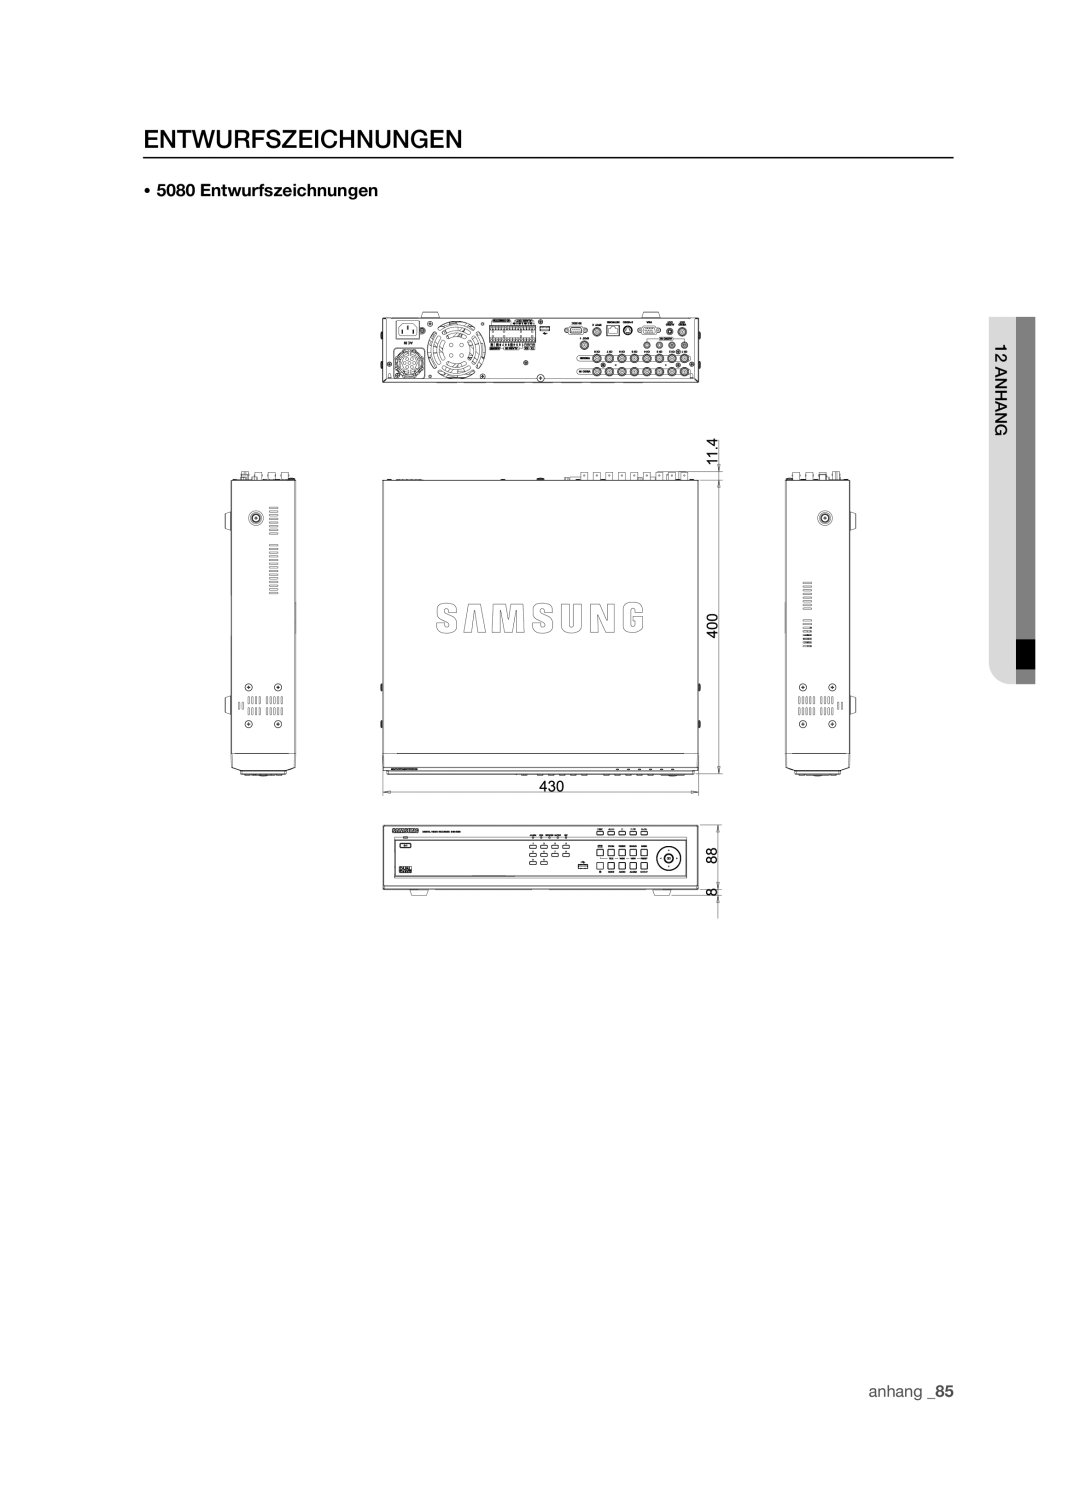 Samsung SHR-5082P/XEG, SHR-5160P, SHR-5162P/XEG, SHR-5080P manual  5080 Entwurfszeichnungen, anhang 